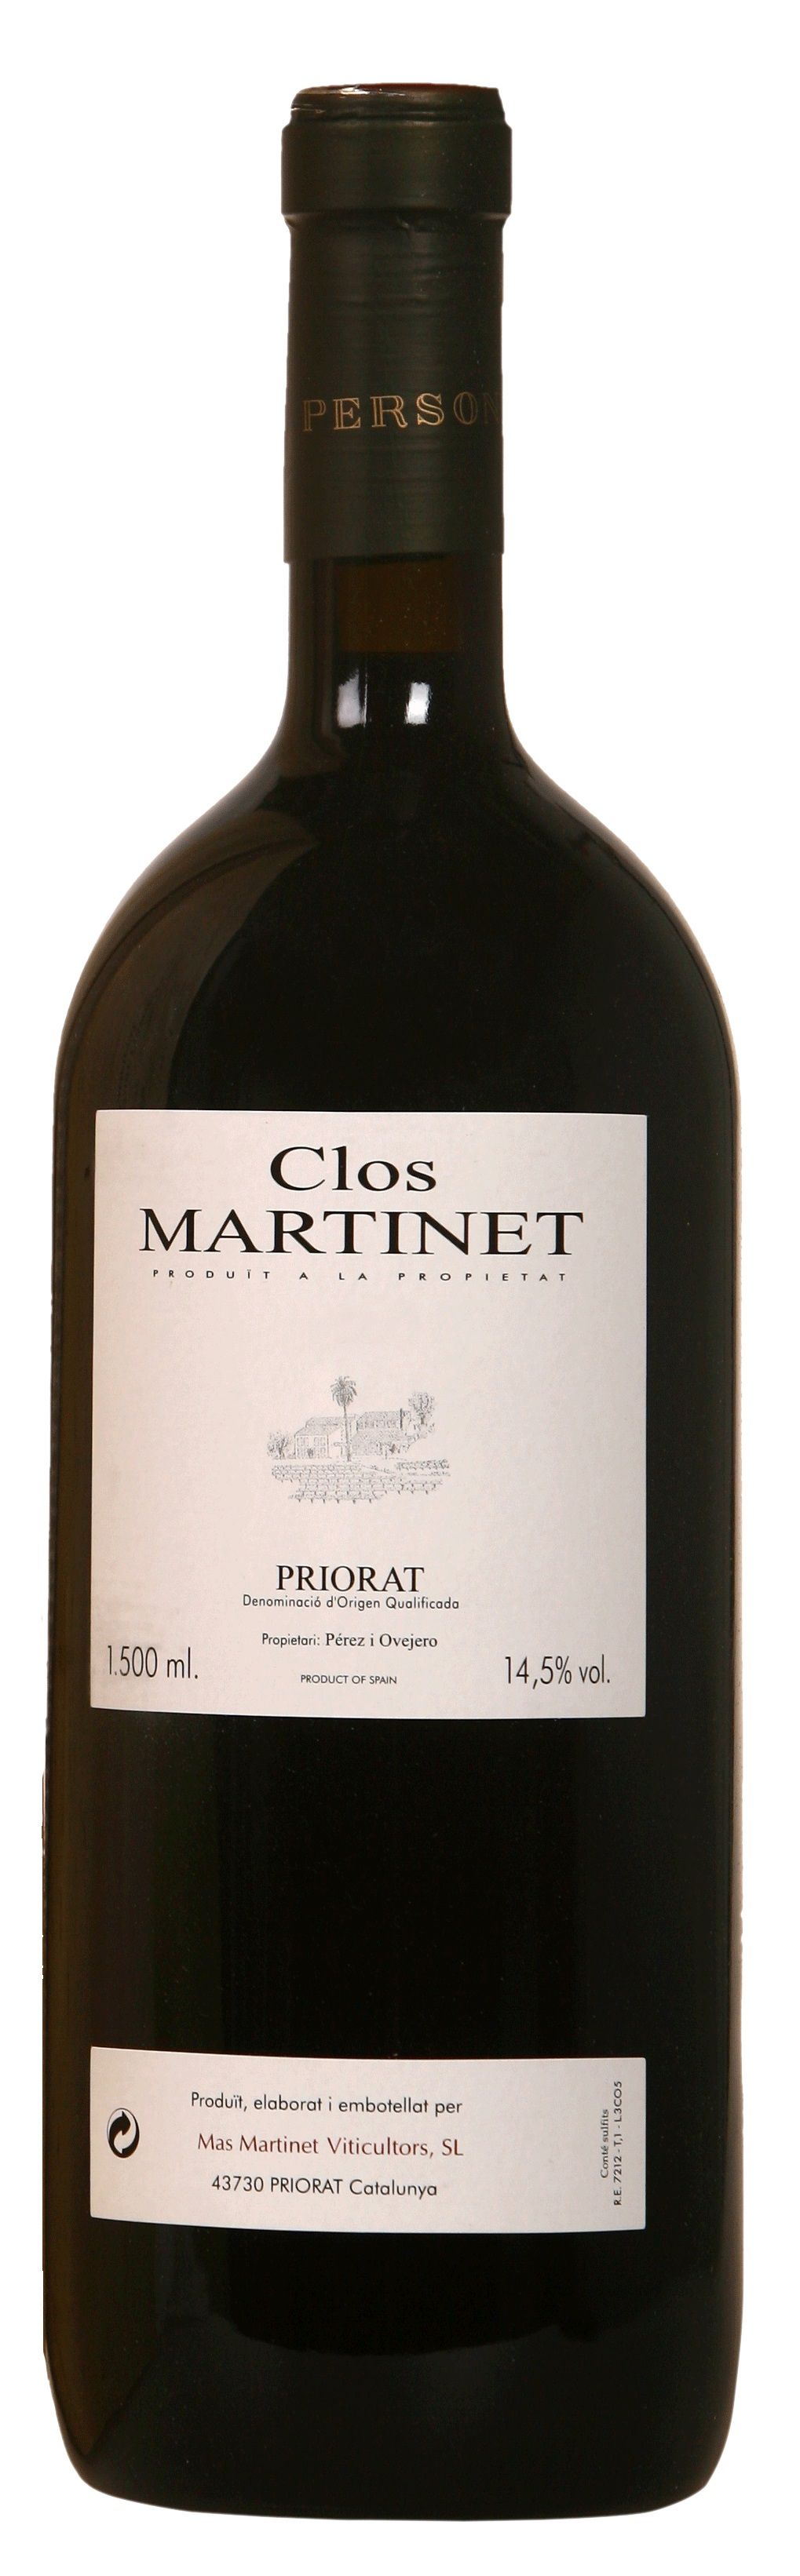 Mas Martinet, Clos Martinet, 2016